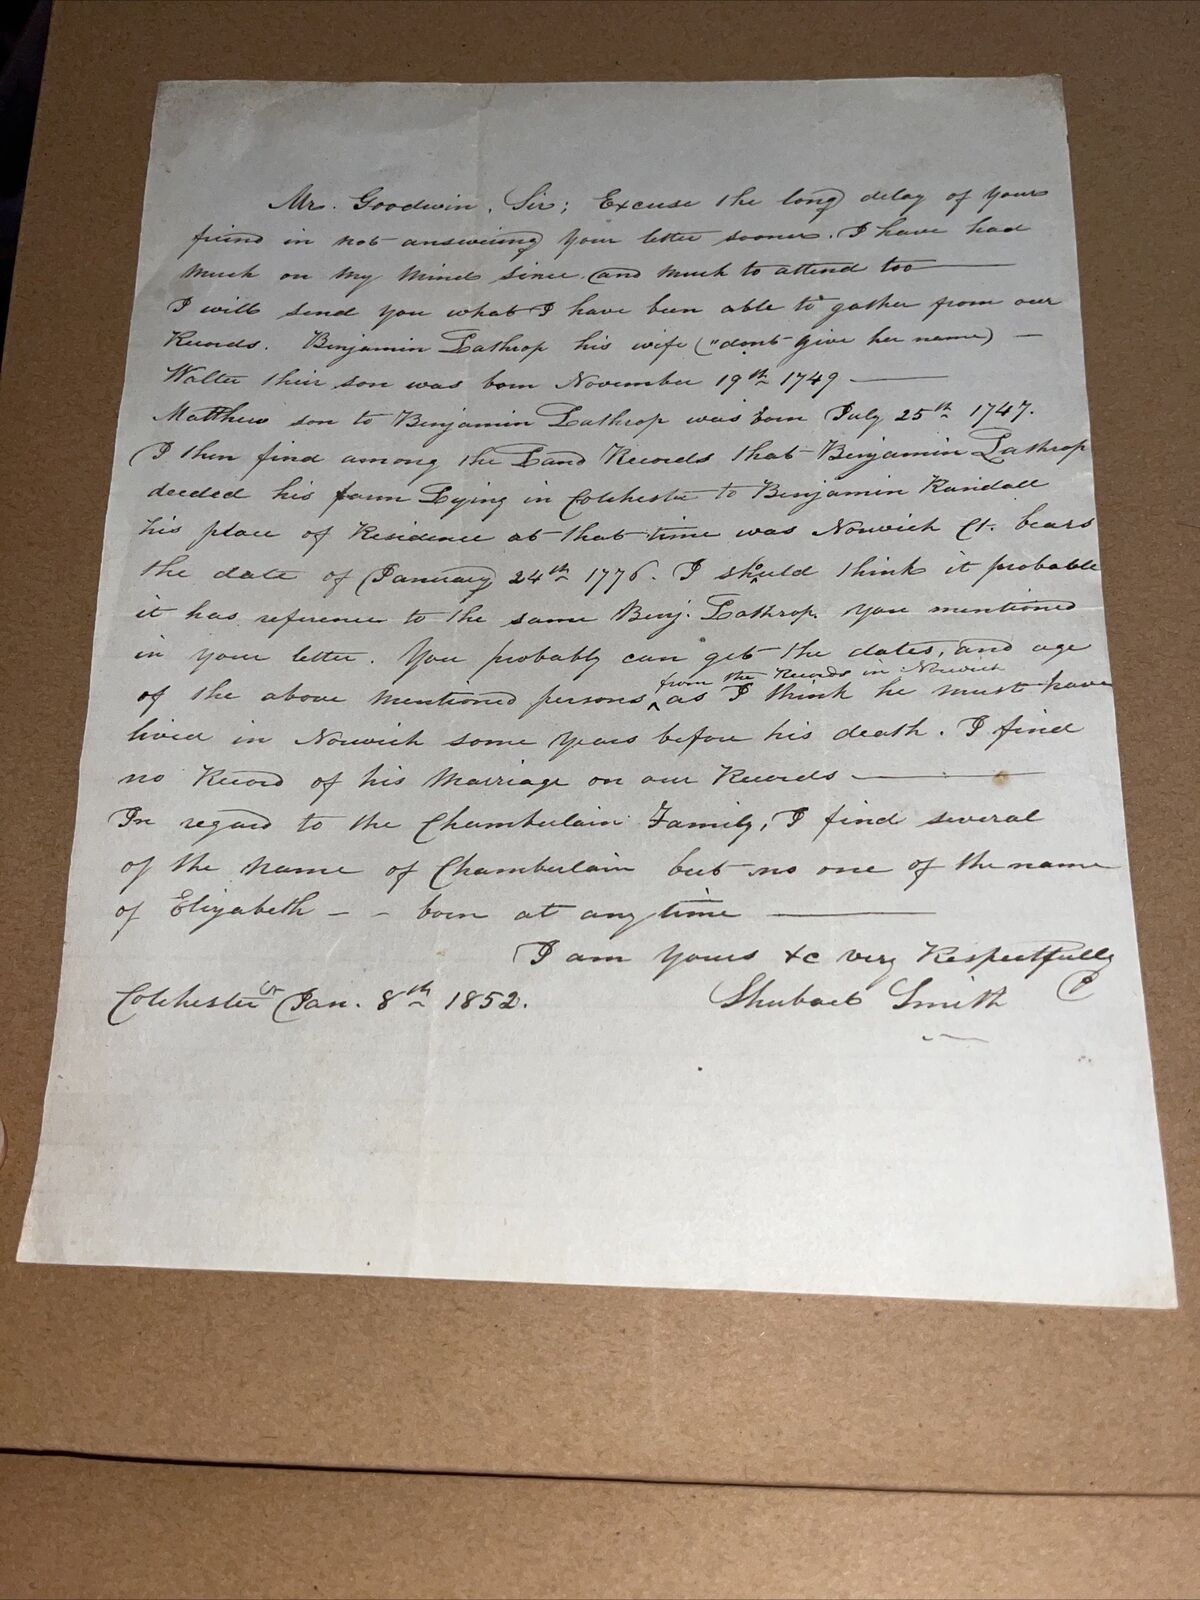 1852 Colchester Letter to Hartford CT Genealogist: Lathrop Randall Chamberlain